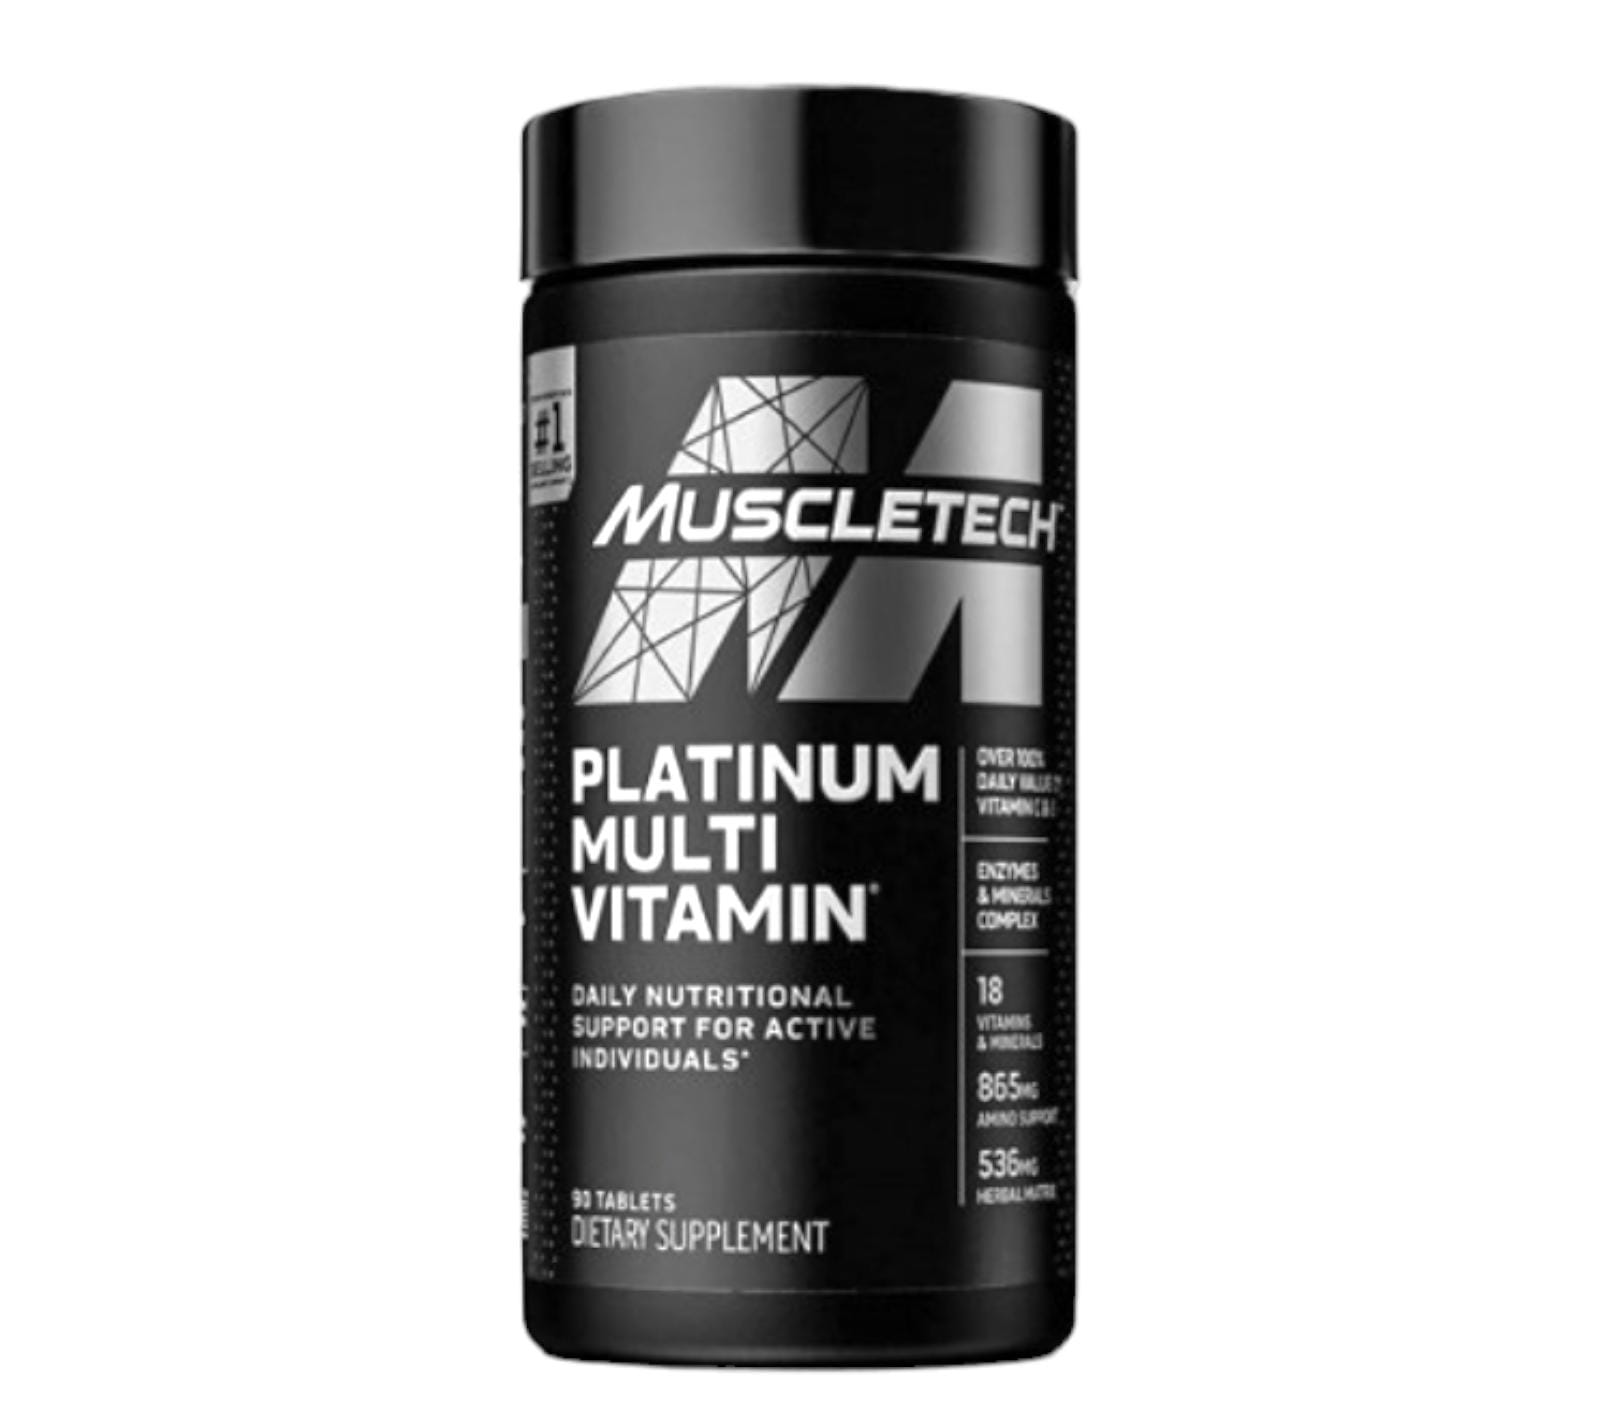 Muscletech platinum multi vitamin